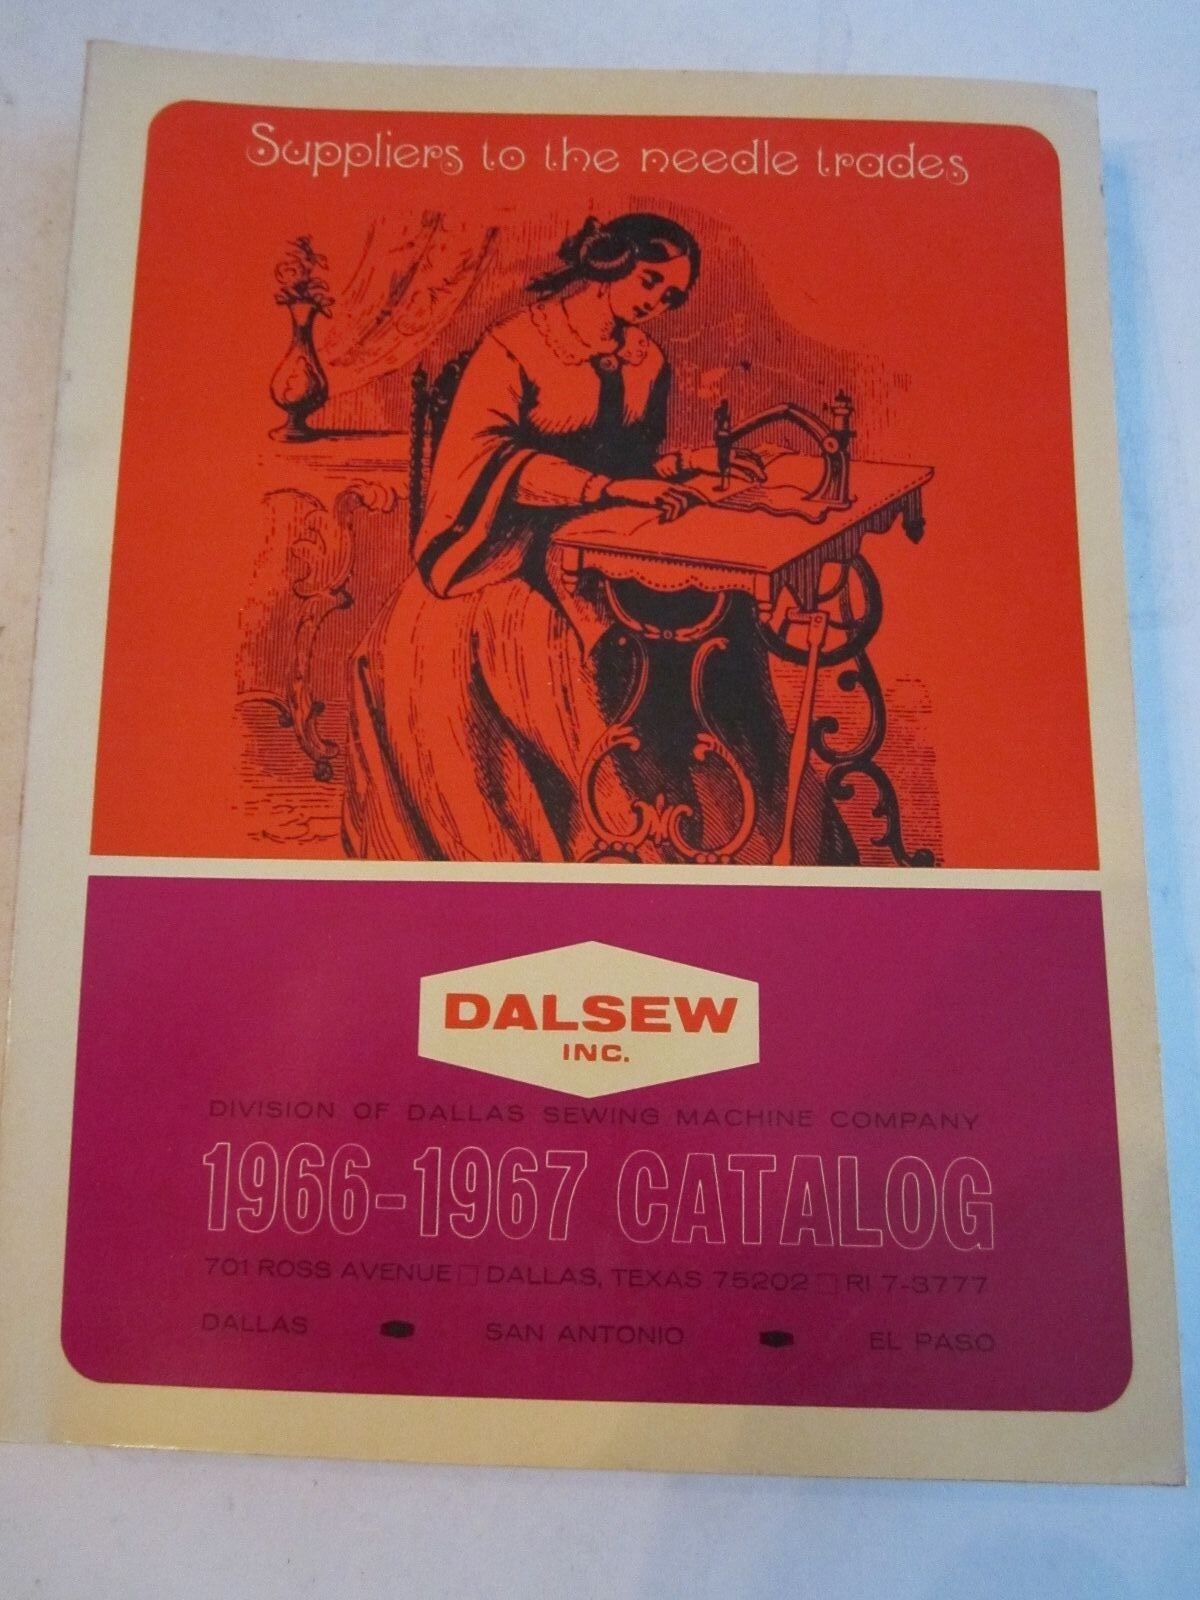 1966-1967 DALLAS SEWING MACHINE PARTS CATALOG - 546 PAGES - SEE PICS - TUB RRRR